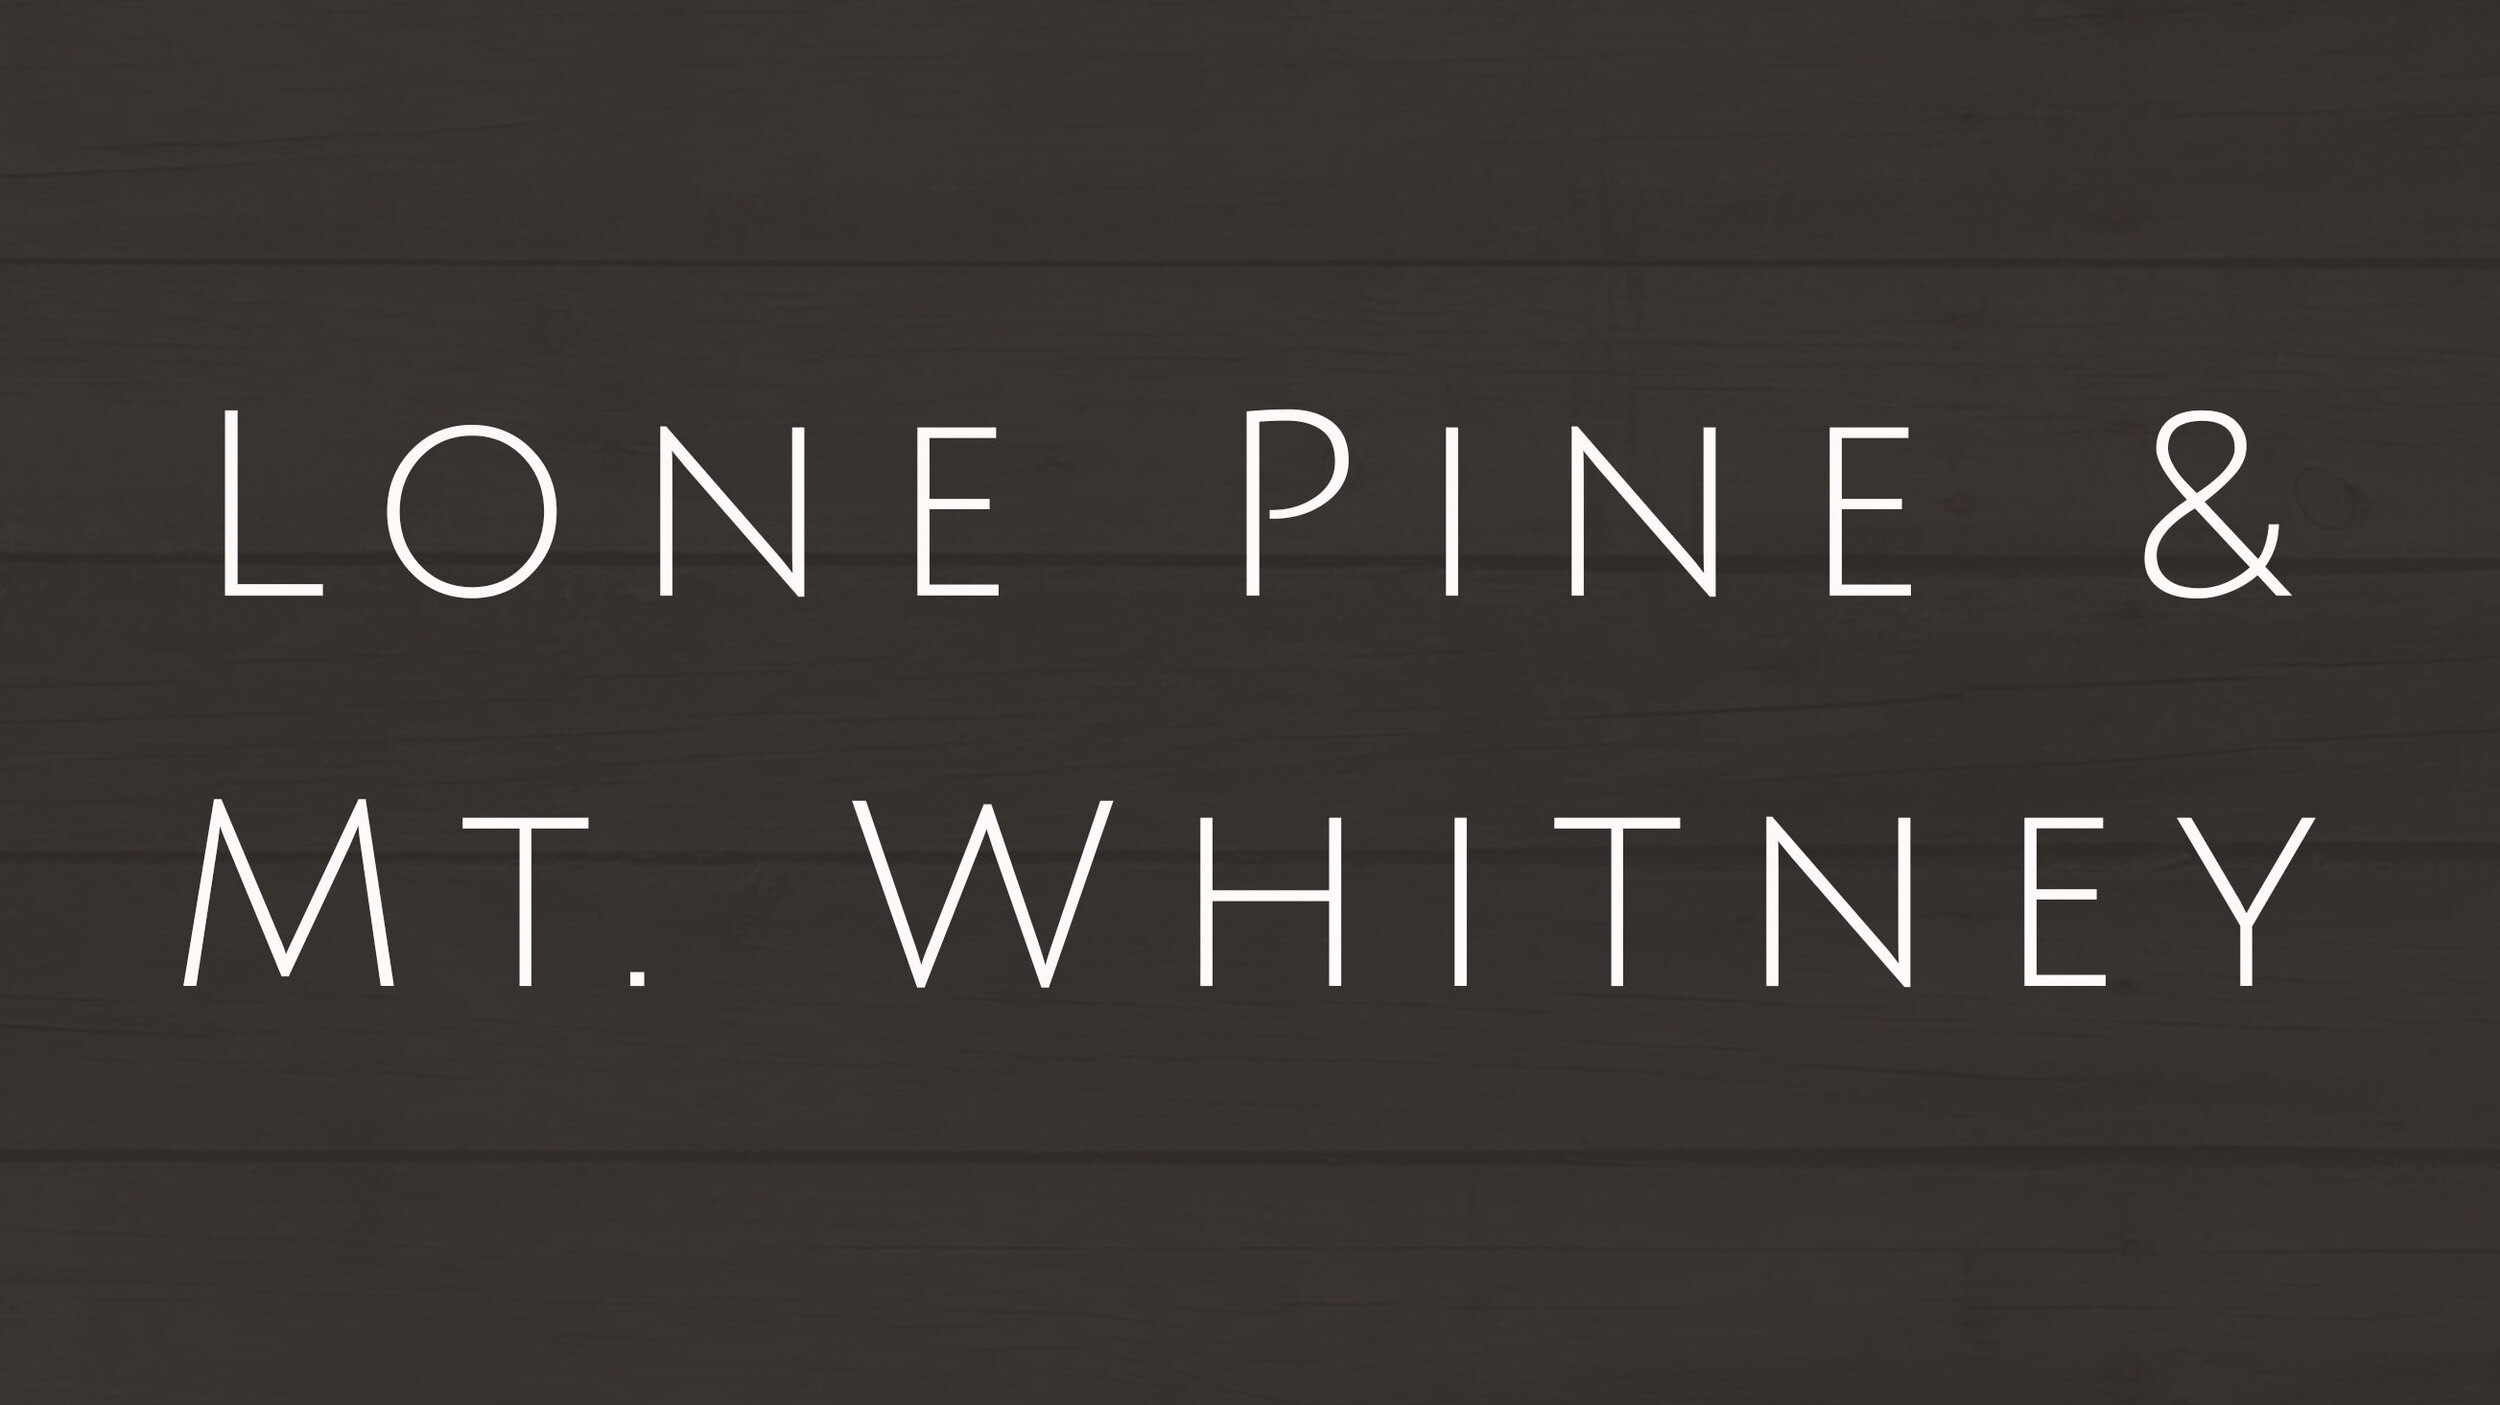 Lone Pine Area 16x9 v2.jpg